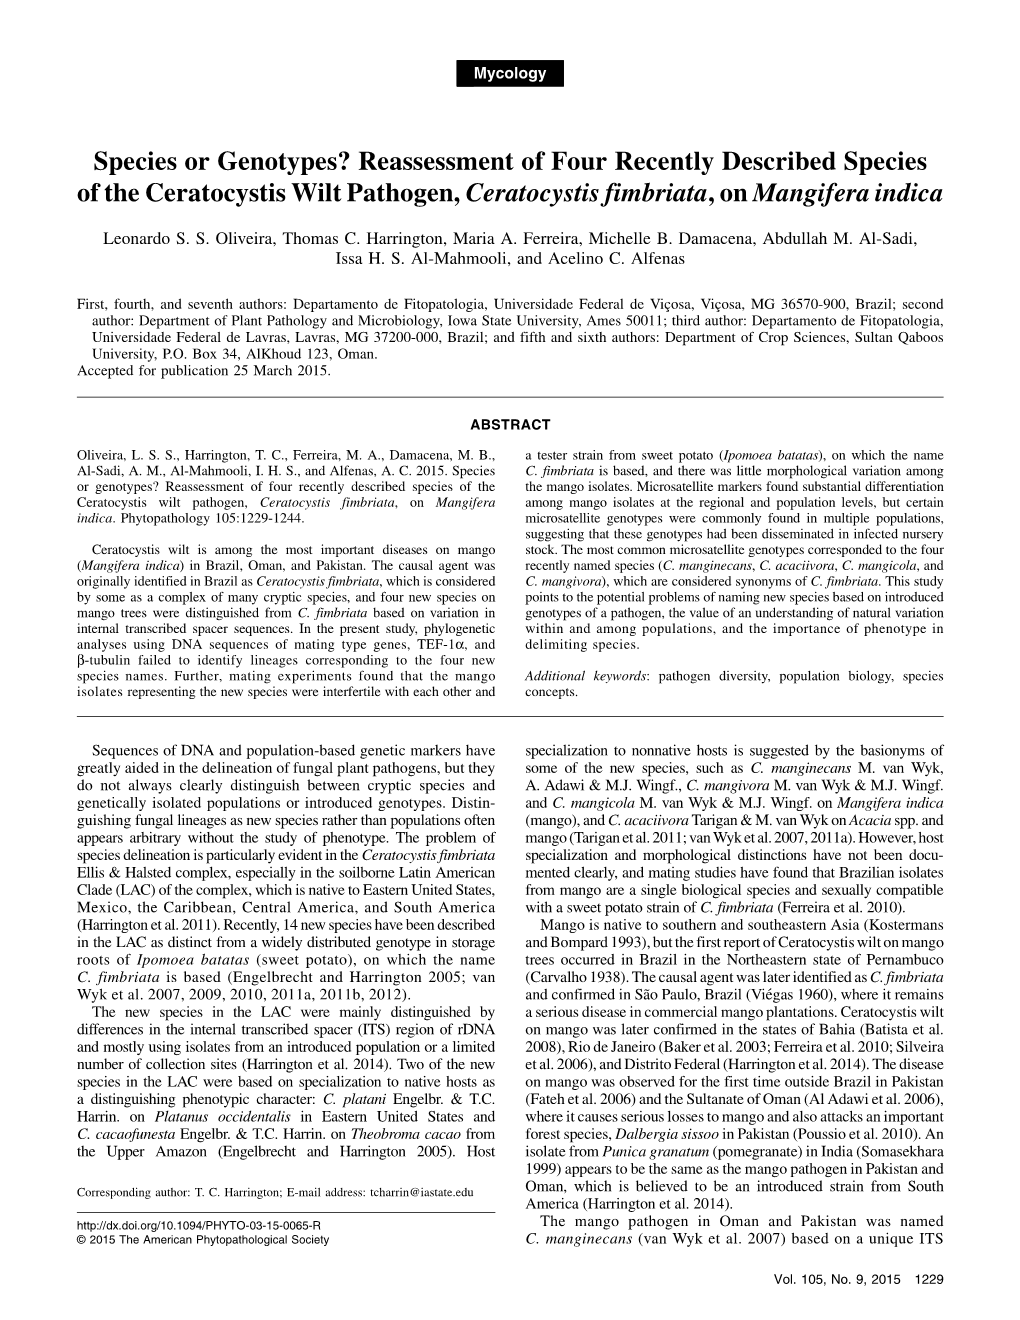 Species Or Genotypes? Reassessment of Four Recently Described Species of the Ceratocystis Wilt Pathogen, Ceratocystis Fimbriata,Onmangifera Indica